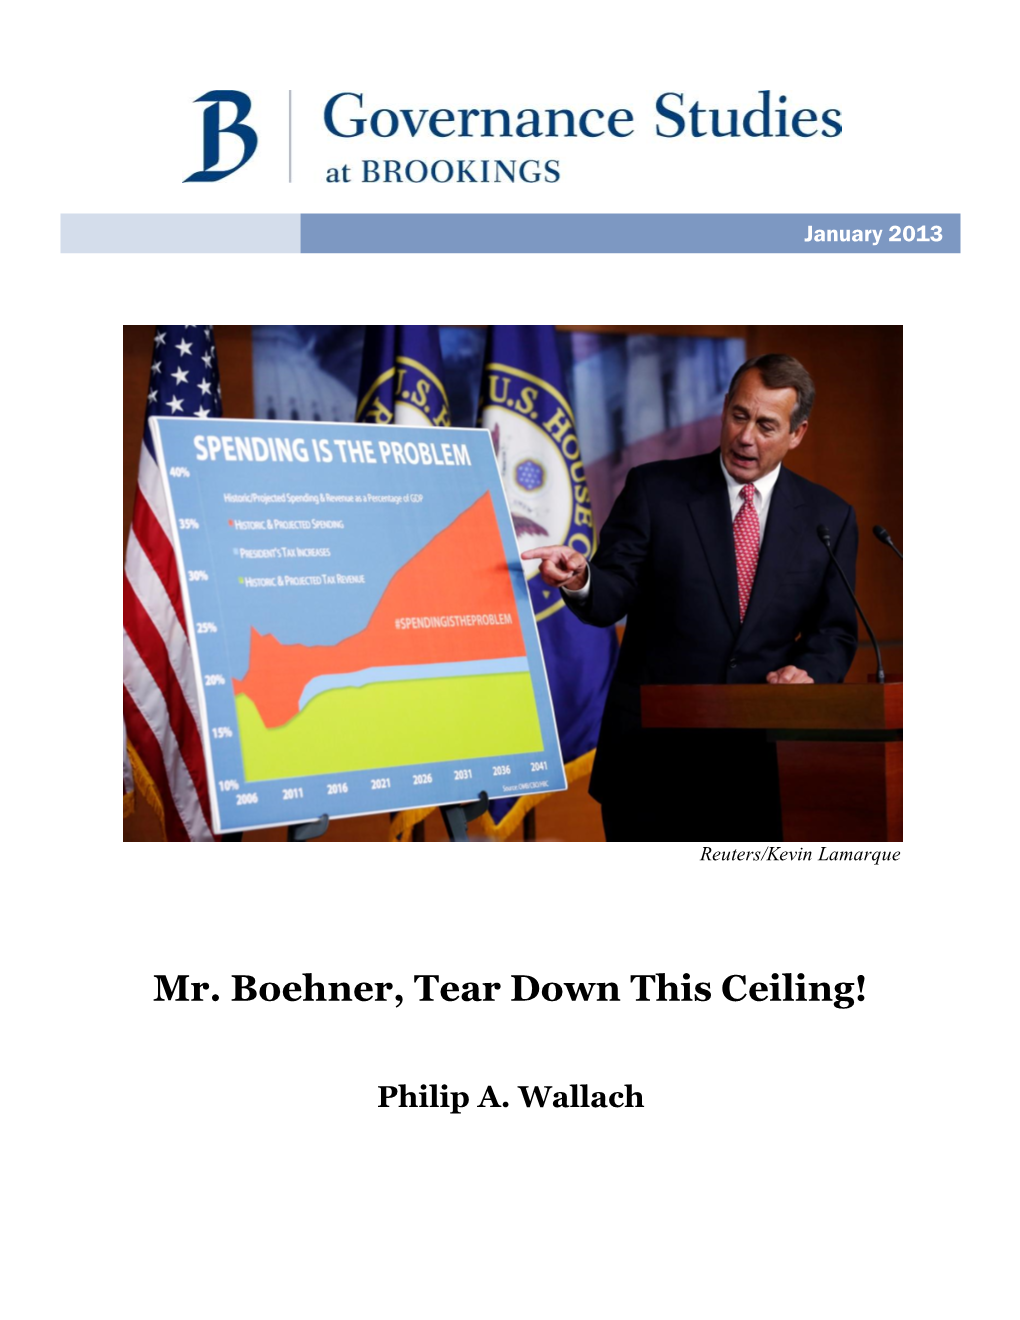 Mr. Boehner, Tear Down This Ceiling!